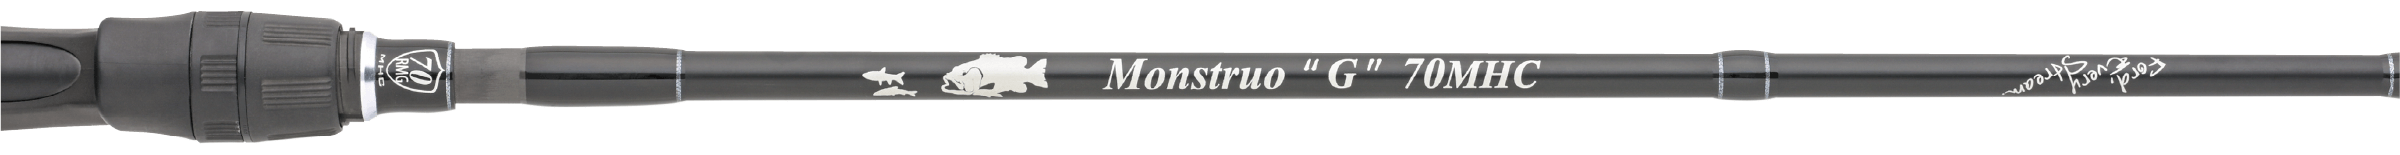 Monstruo”G” 70MHC 